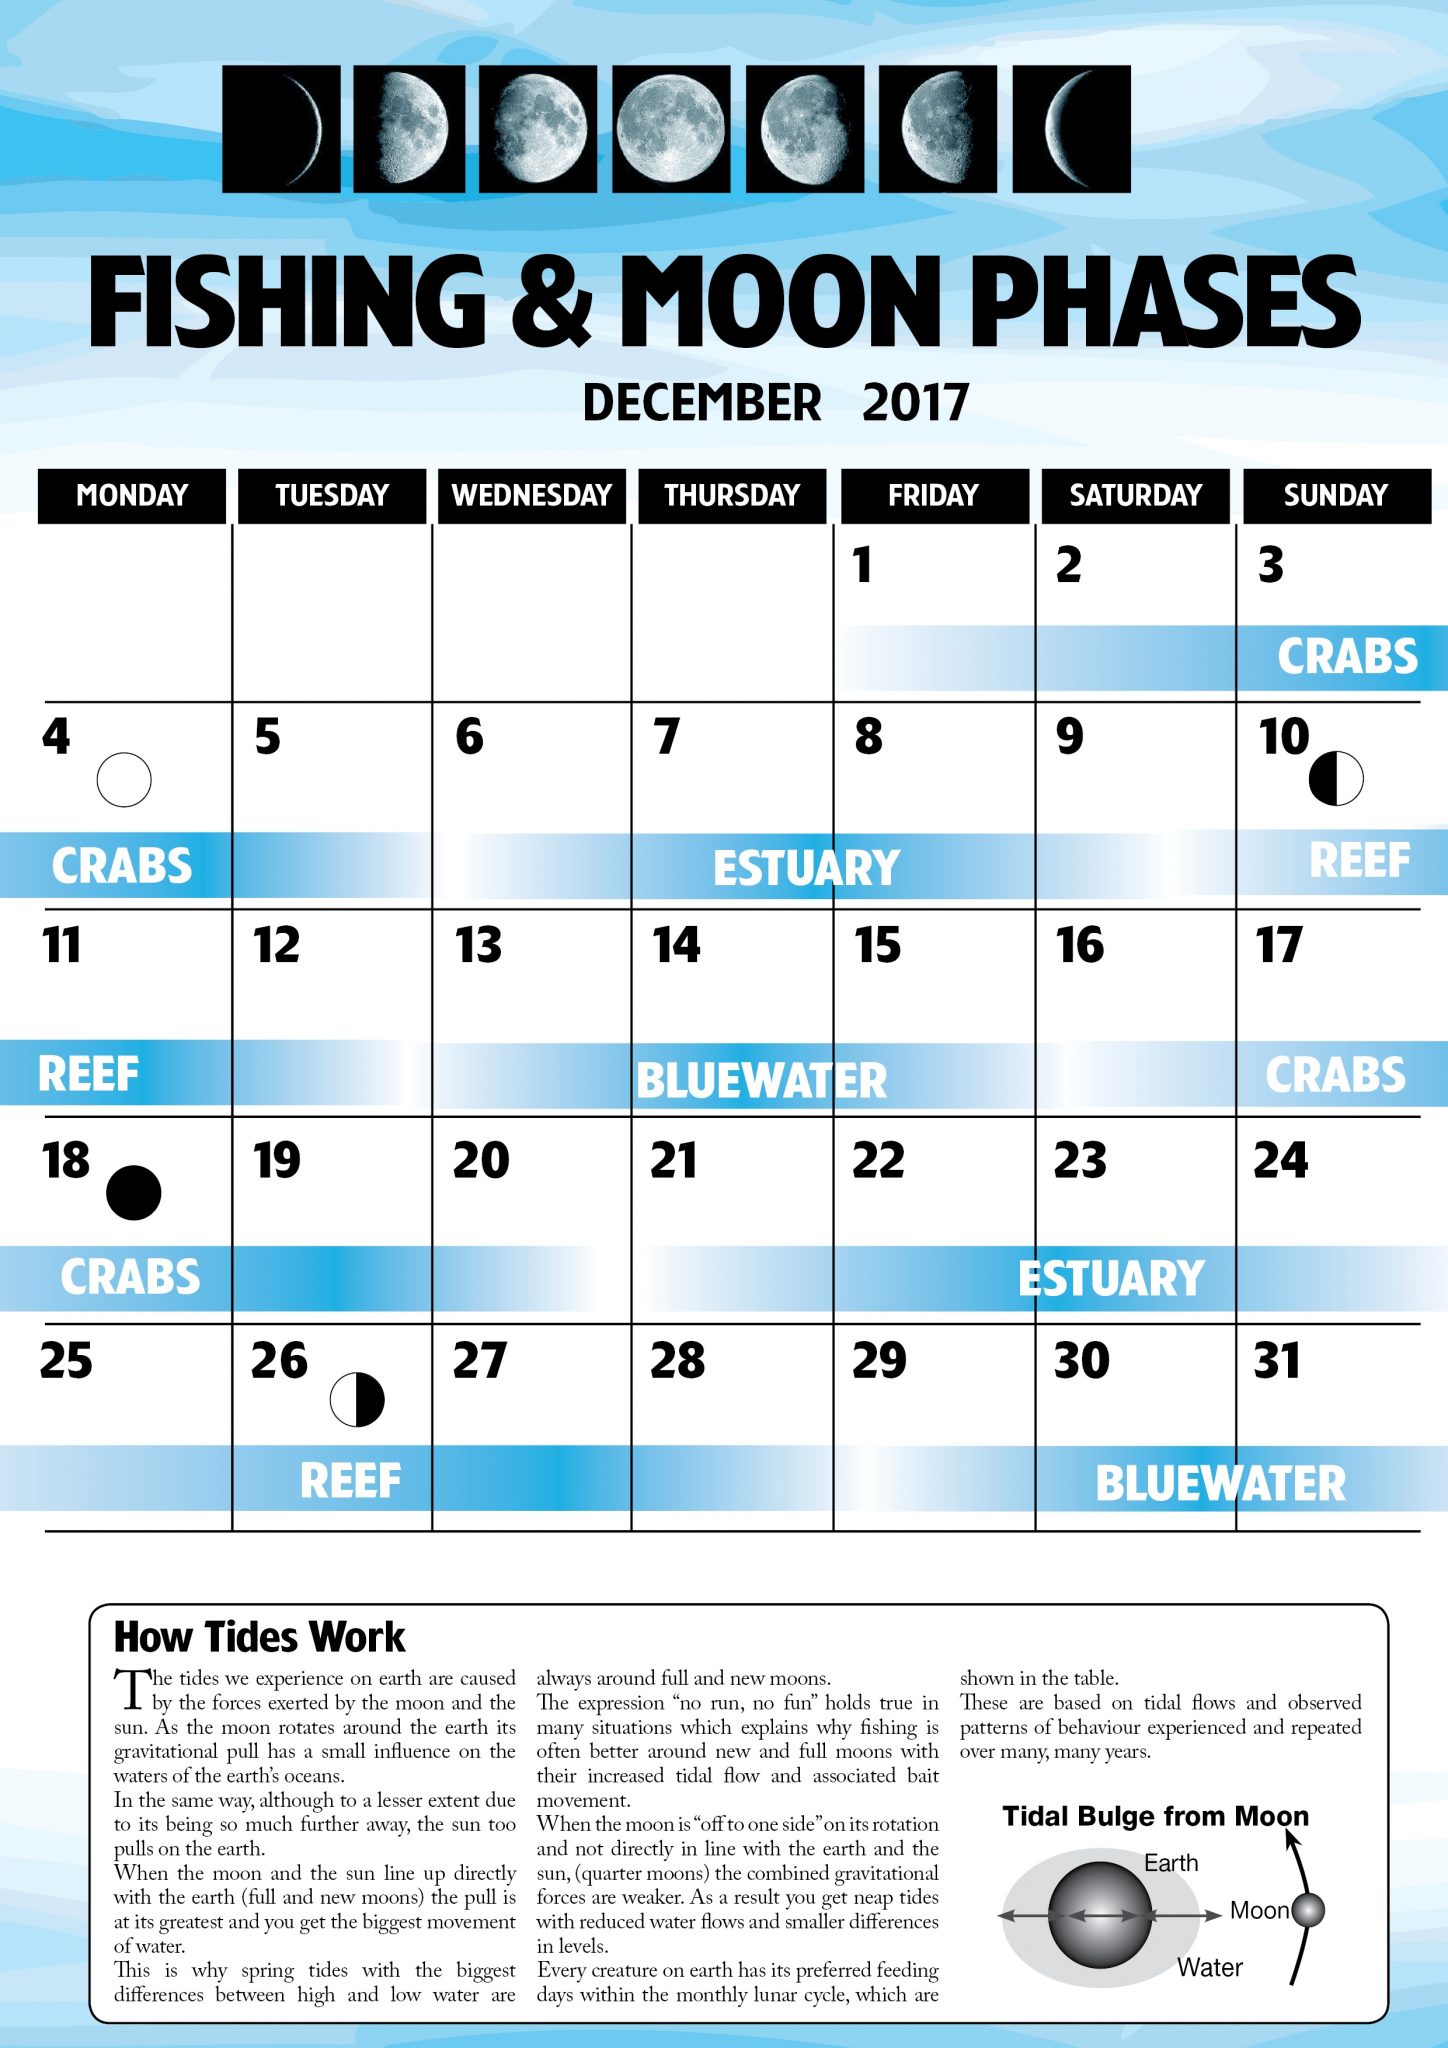 Fishing & Moon Phases December 2017 Fish & Boat Magazine